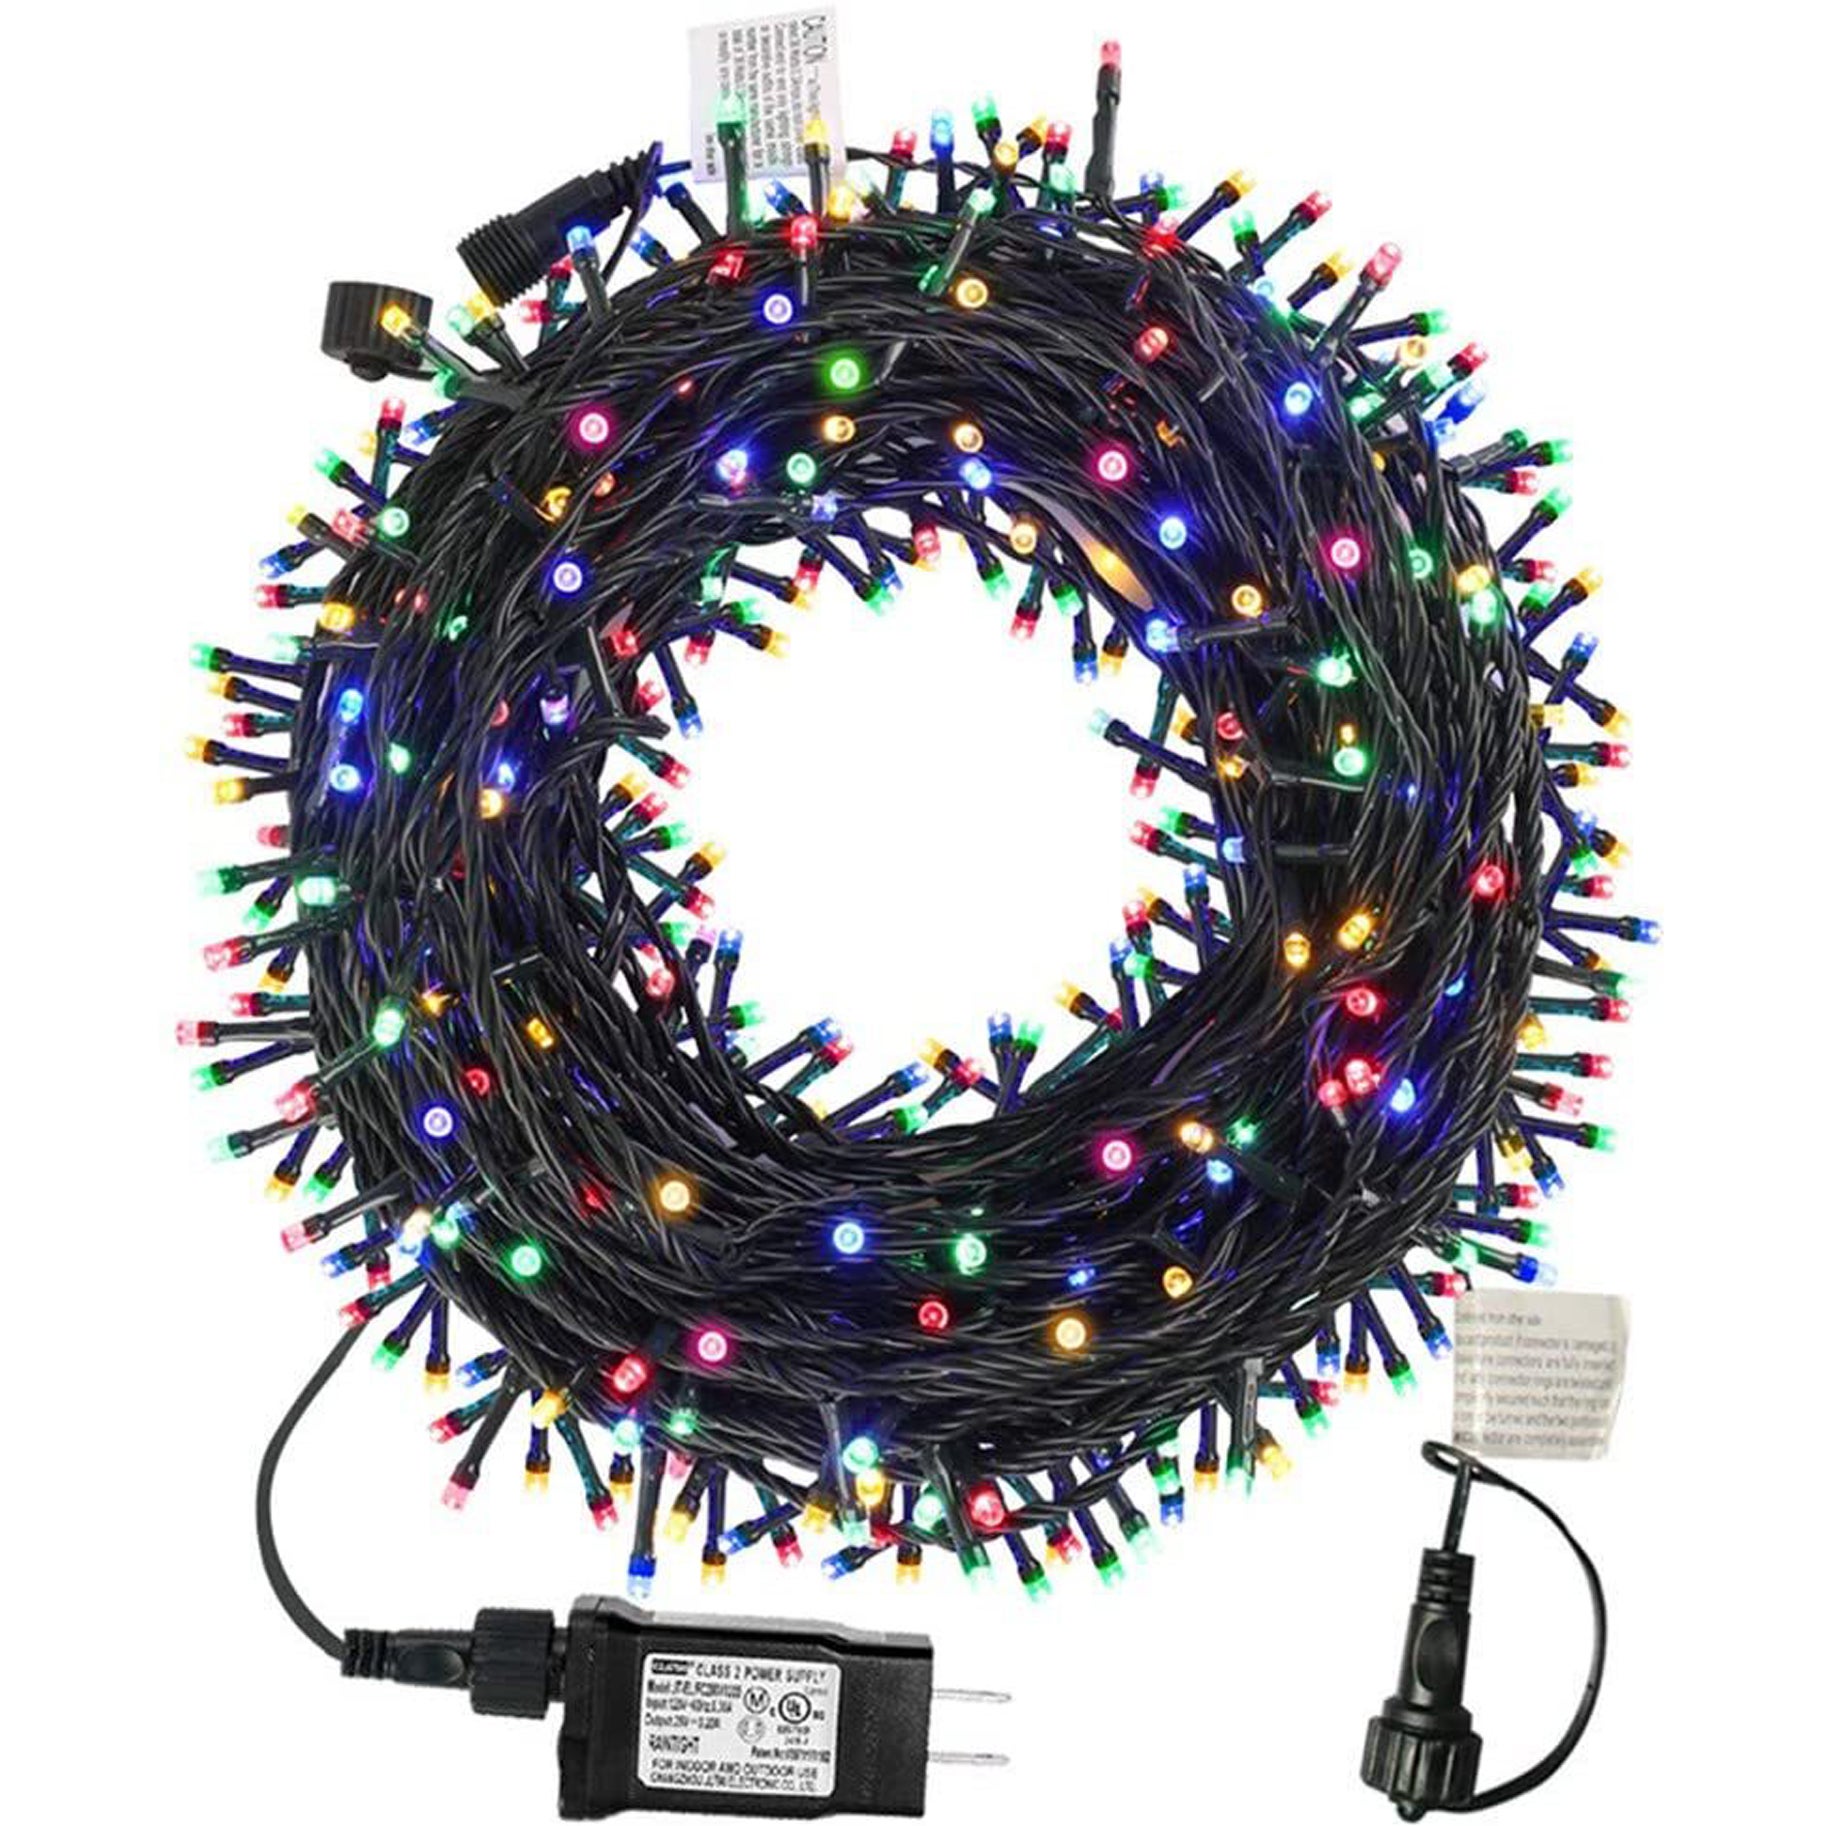 The Best Indoor Christmas Light Option: MZD8391 105-Foot Christmas Lights